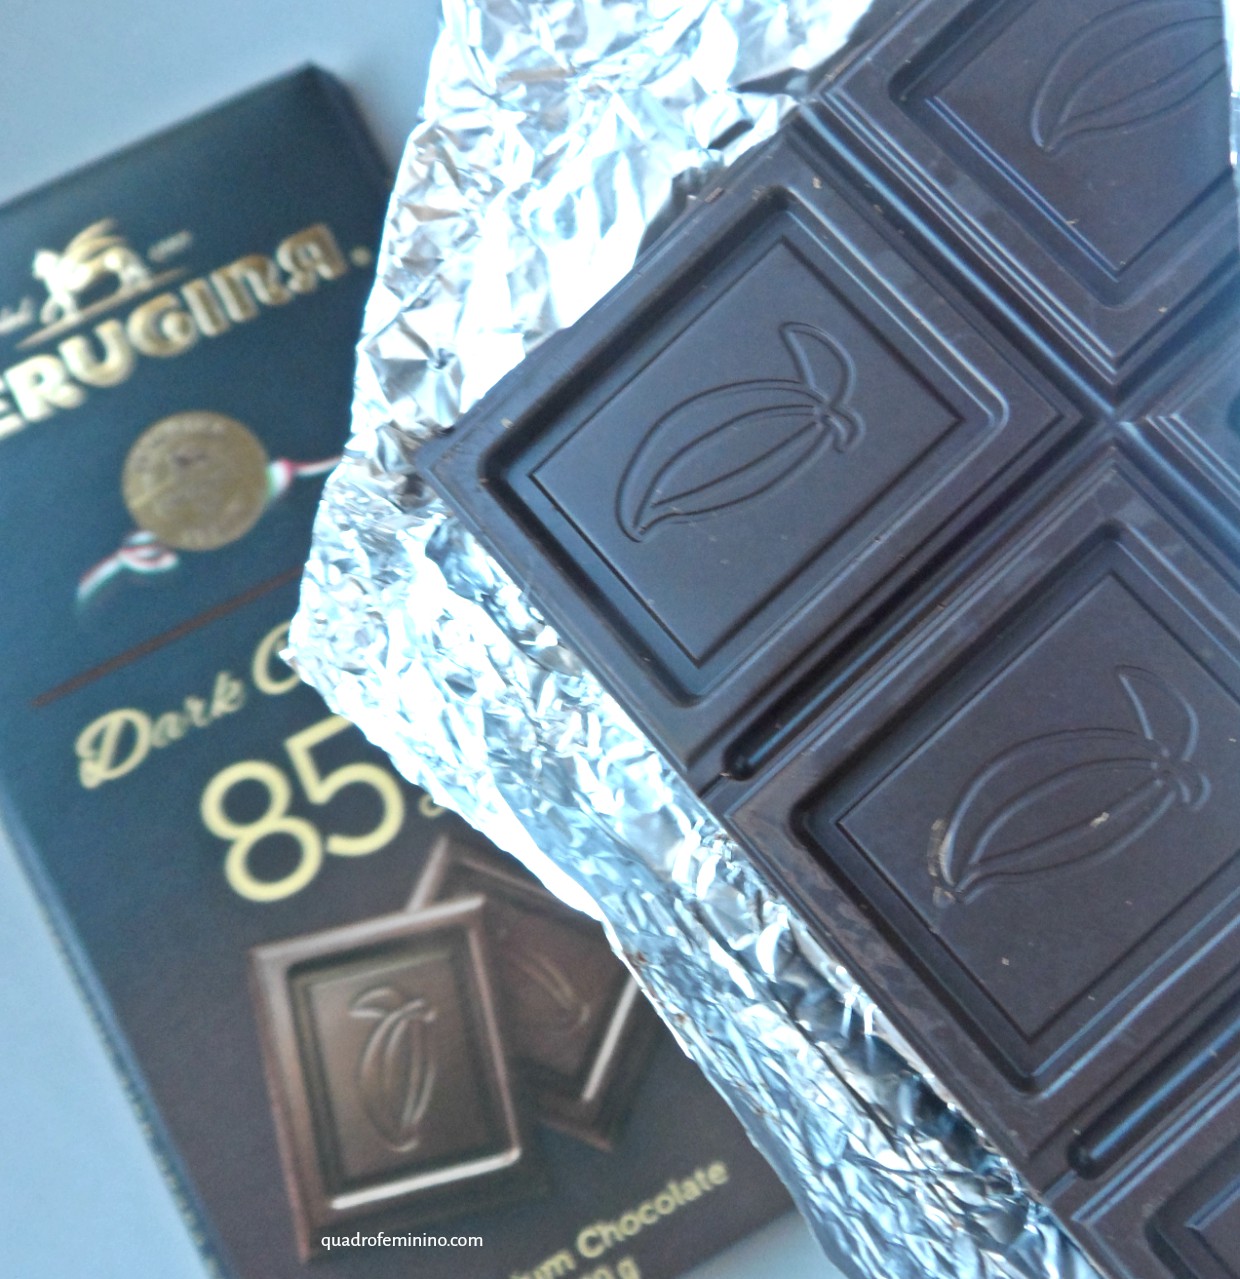 Chocolate 85 cacau 